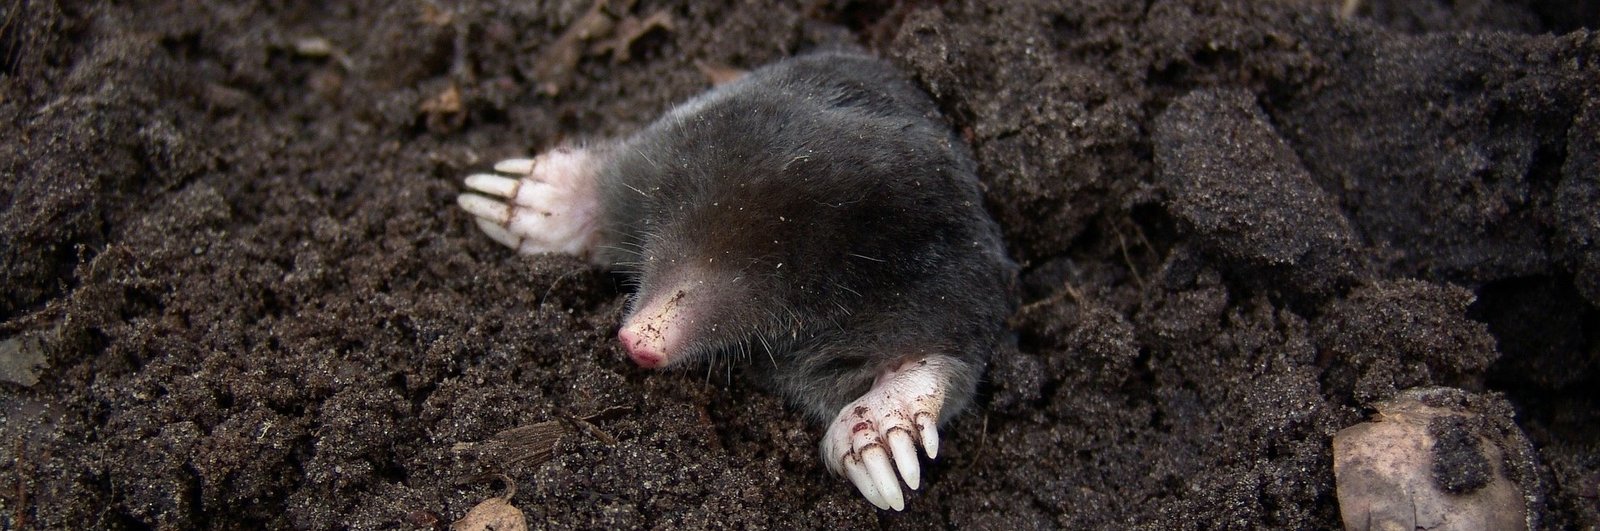 Picture of mole found in north american soil